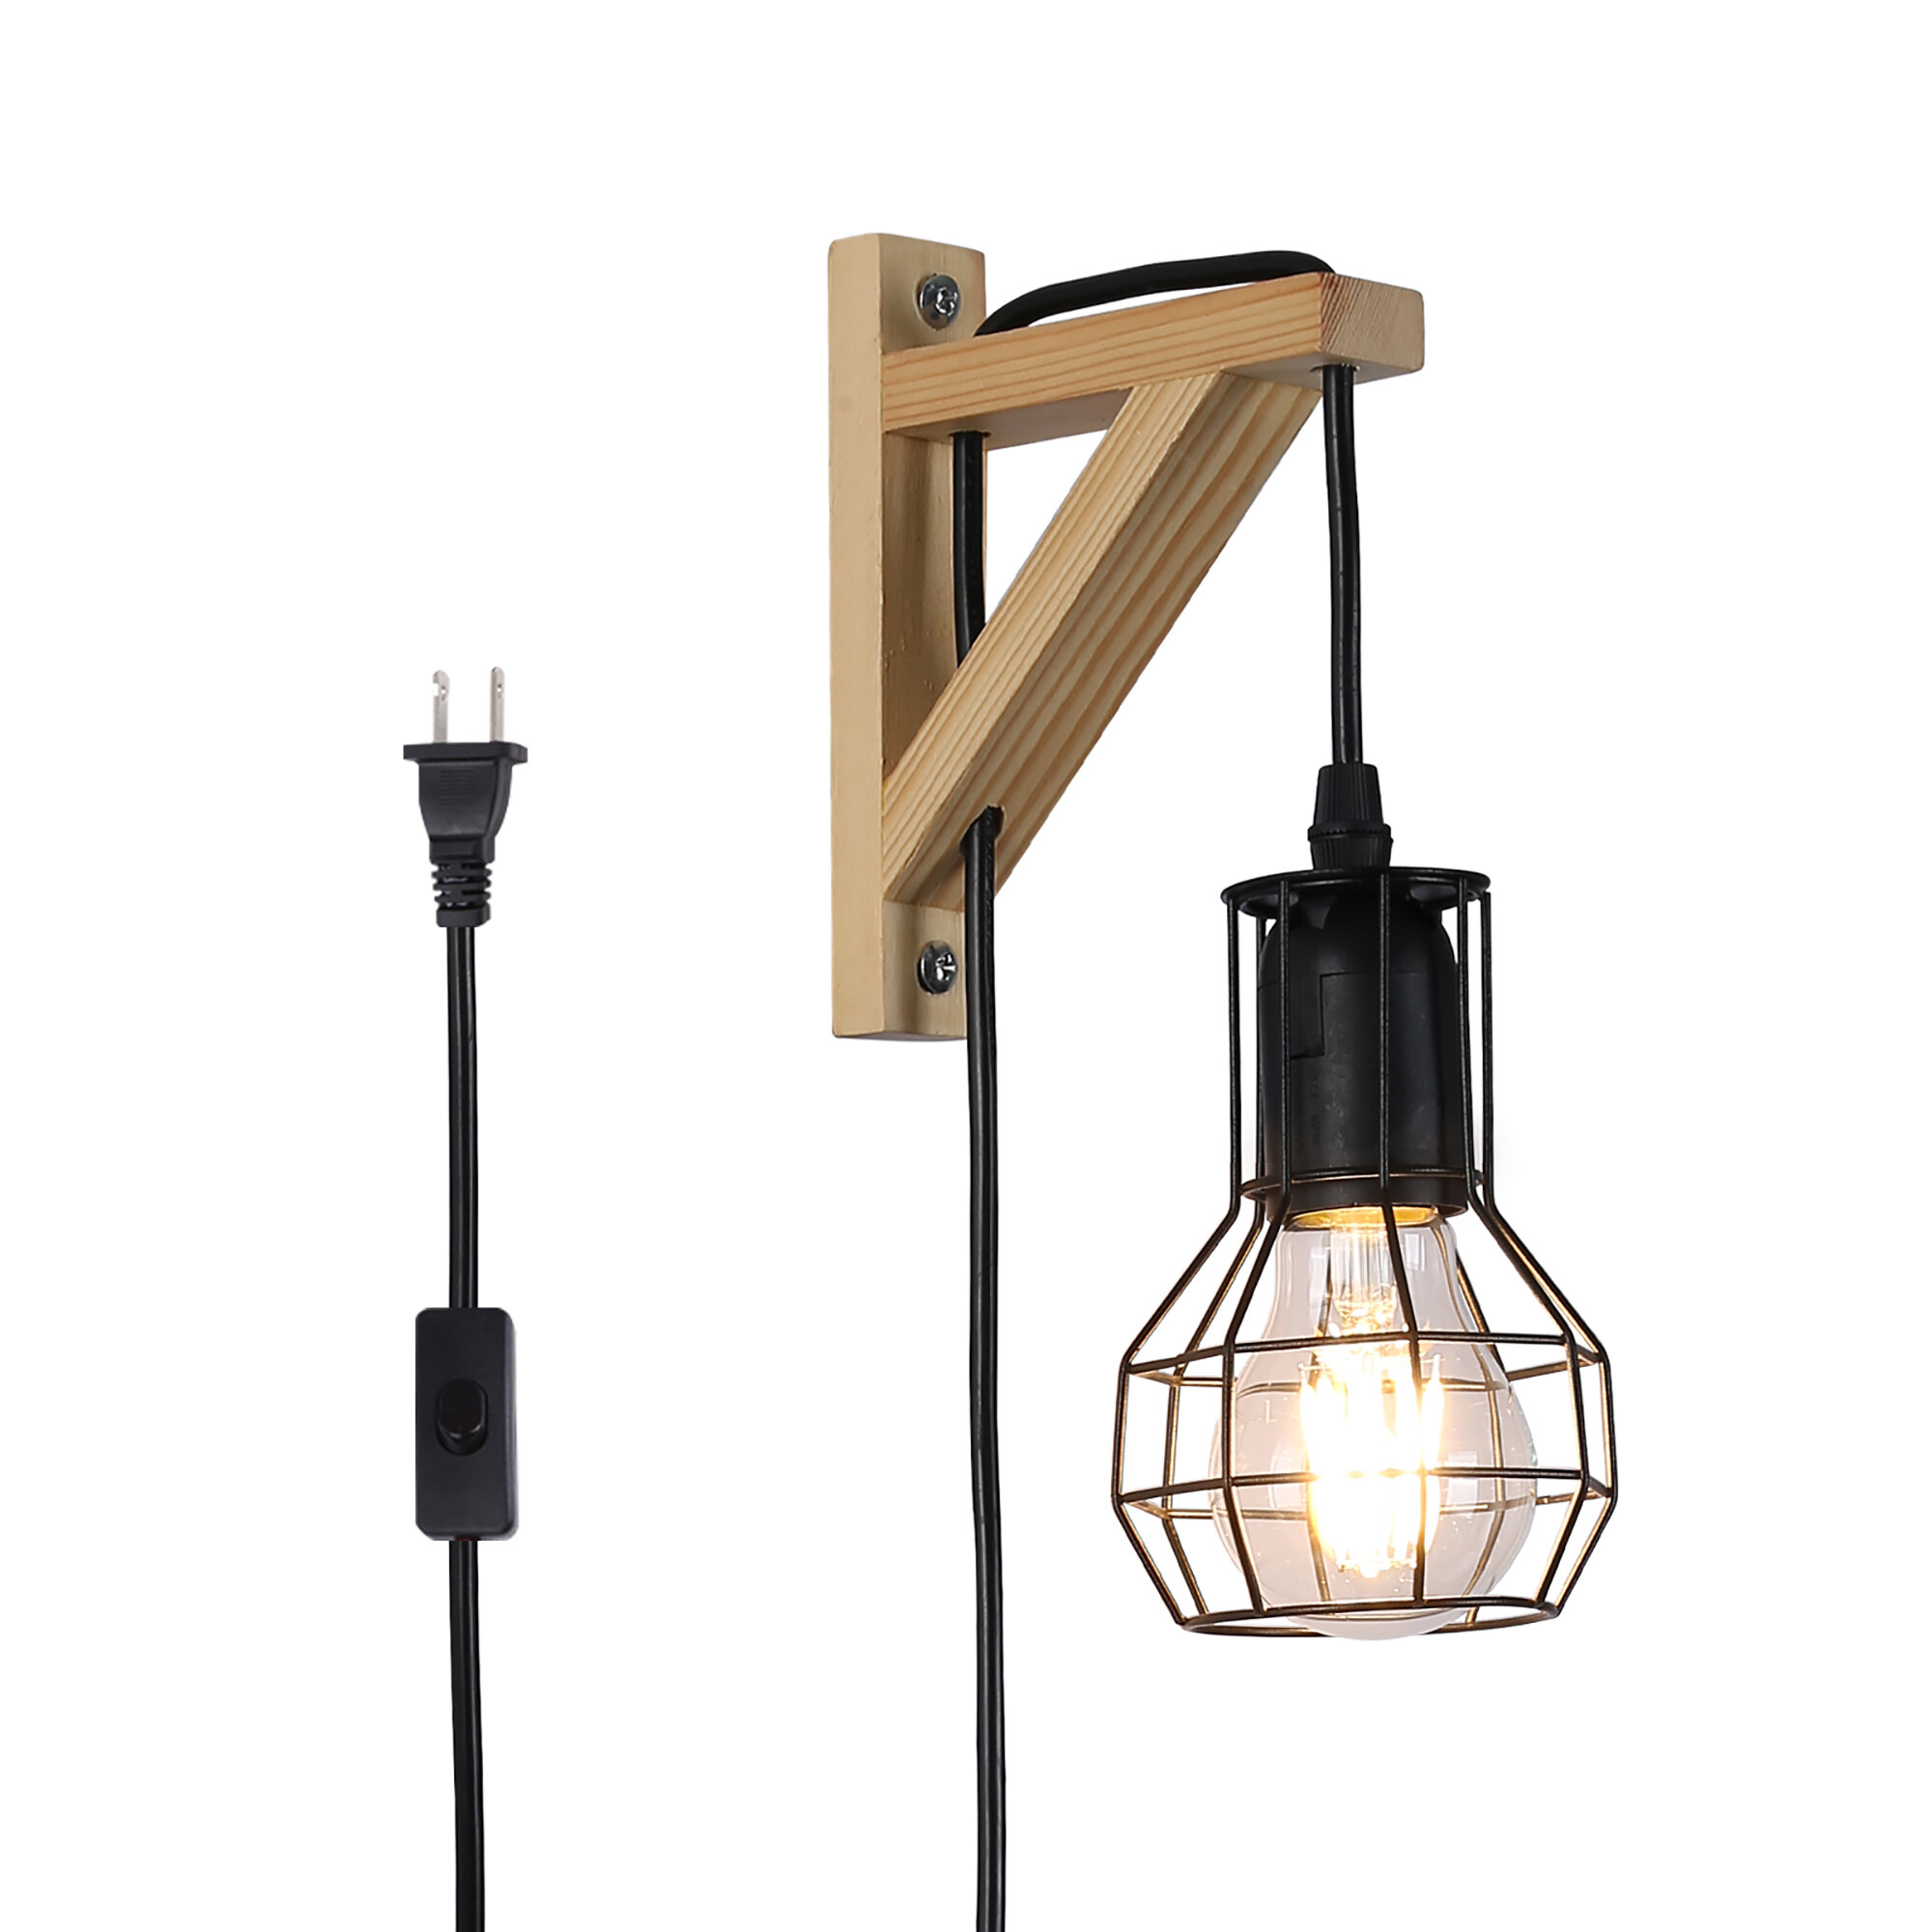 17 Stories Modern Industrial Plug in Cord Wall Lamp Black Wood Retro Rustic  Adjustable Hanging Wall Sconces  Reviews Wayfair